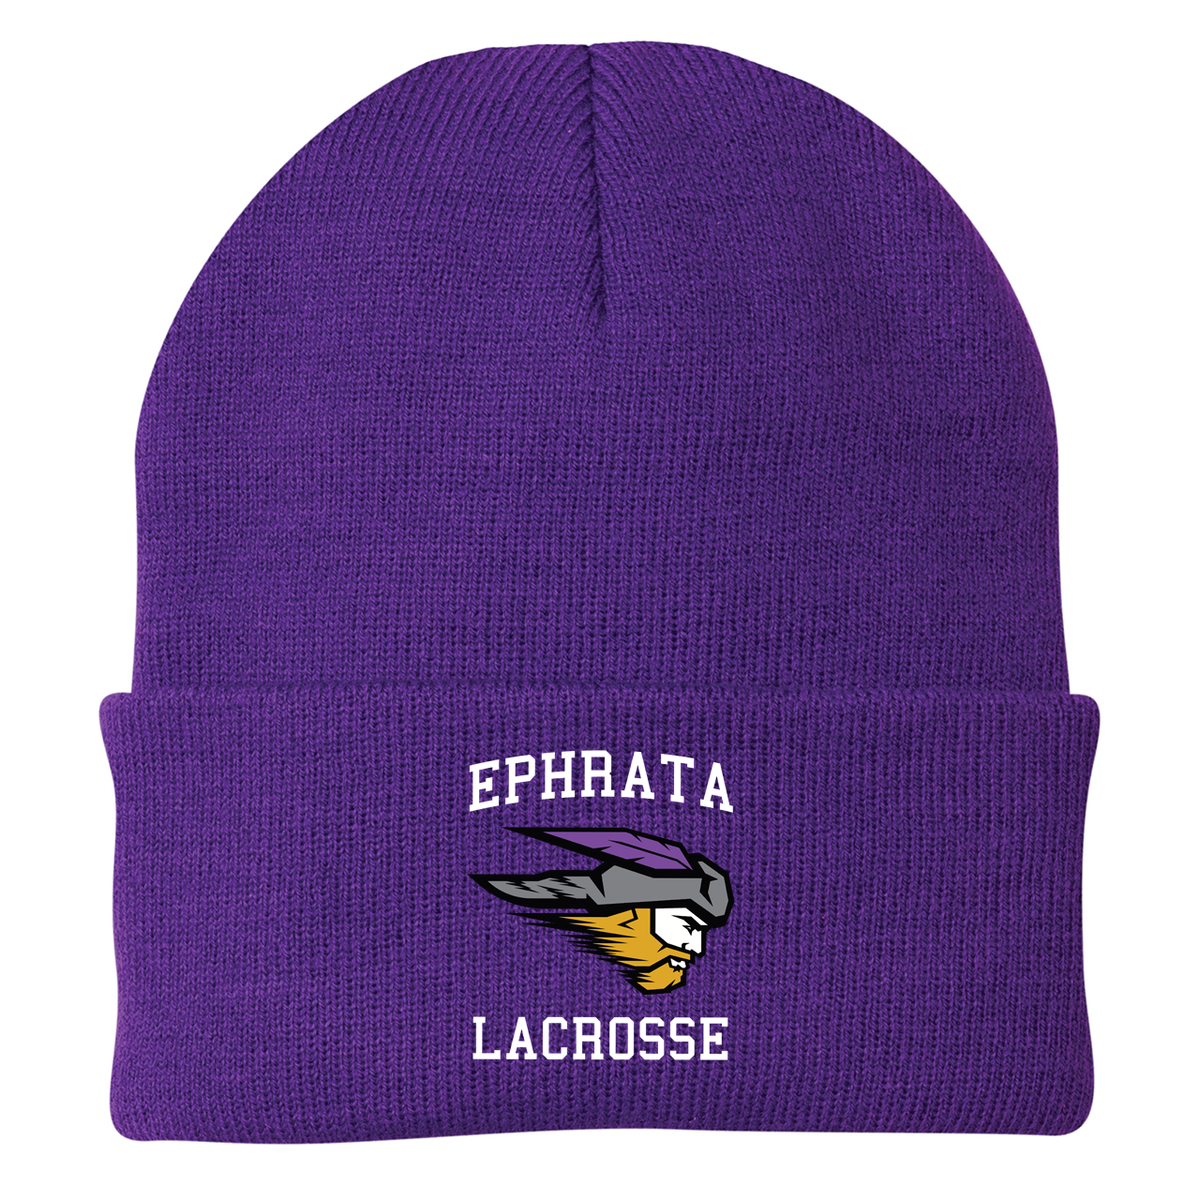 Ephrata Lacrosse Knit Beanie